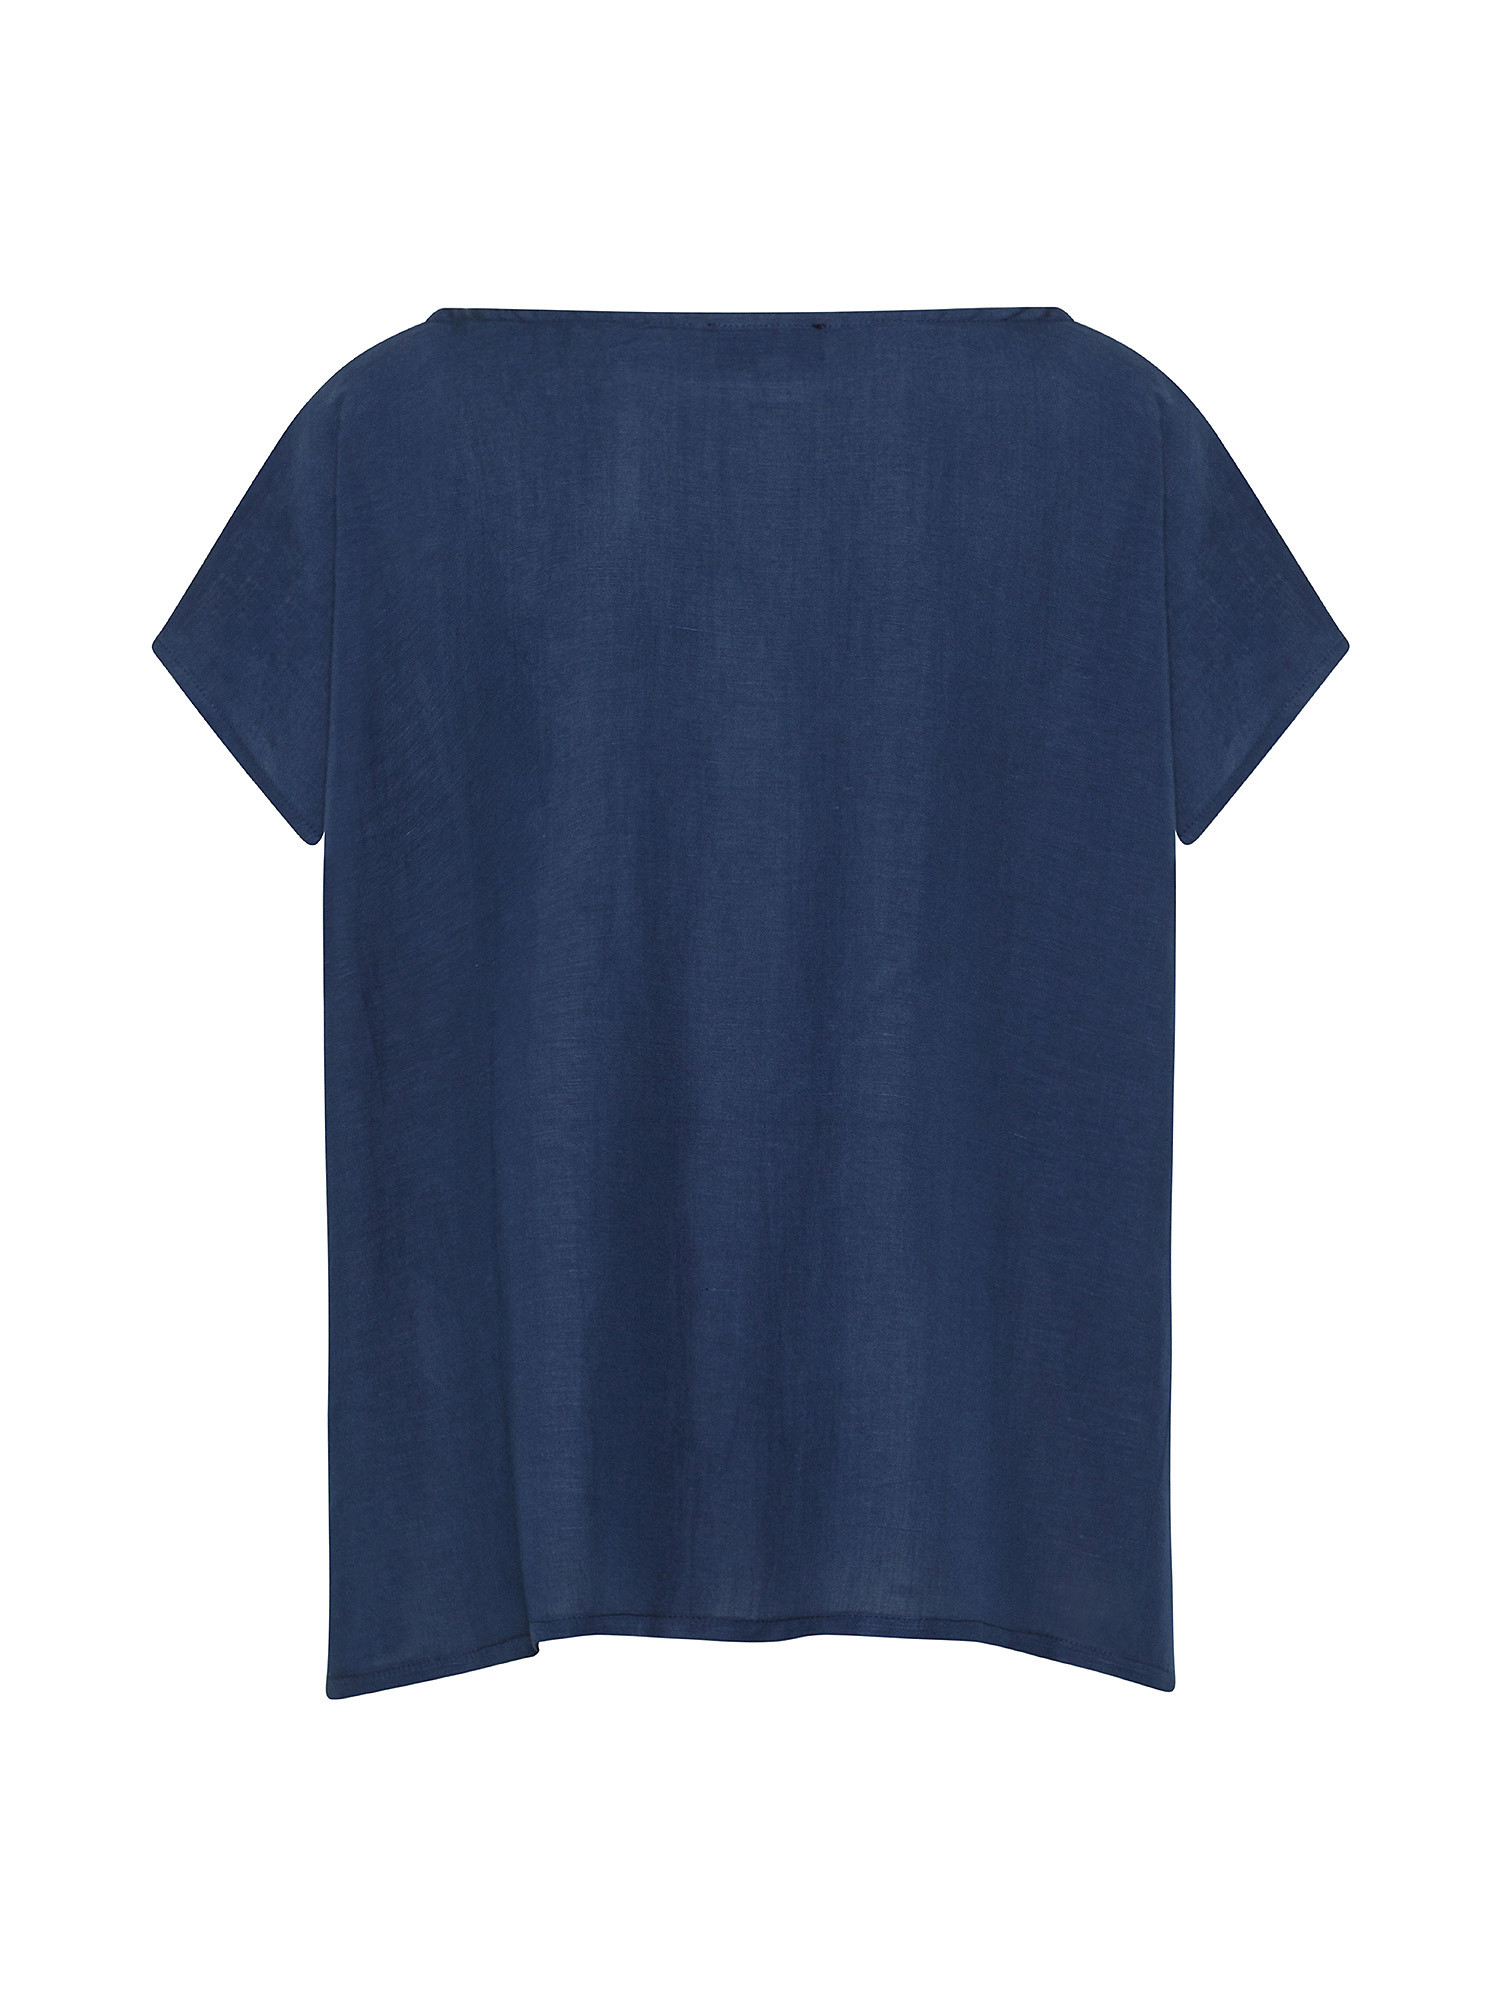 Shirt, Blue, large image number 1